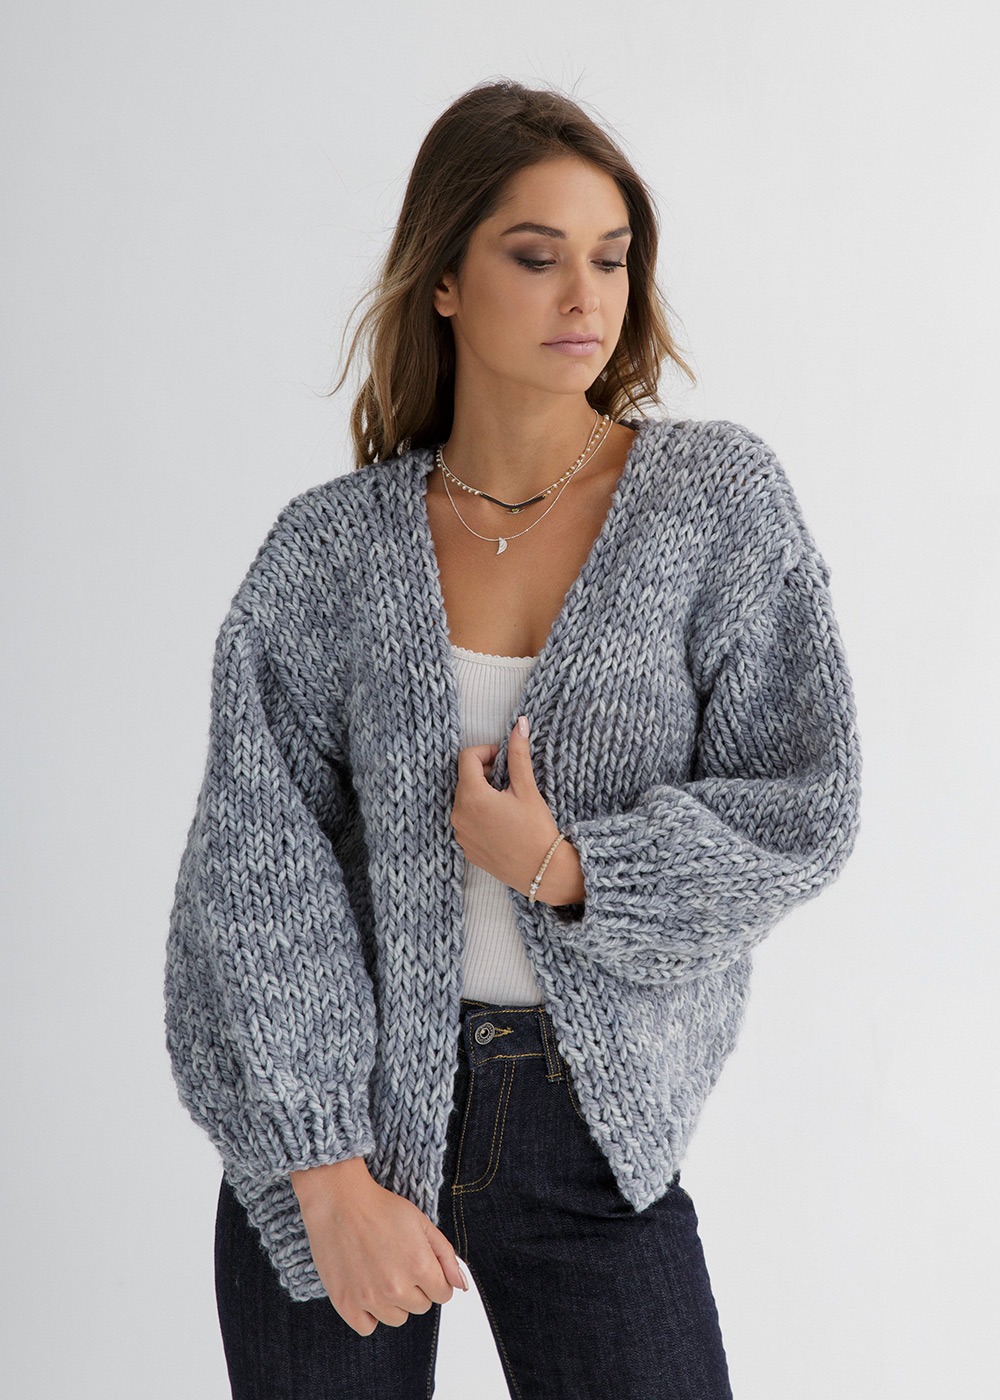 https://throughthestitch.com/wp-content/uploads/2020/04/knit-cardigan-pattern-jacket-knitting-pattern-1.jpg